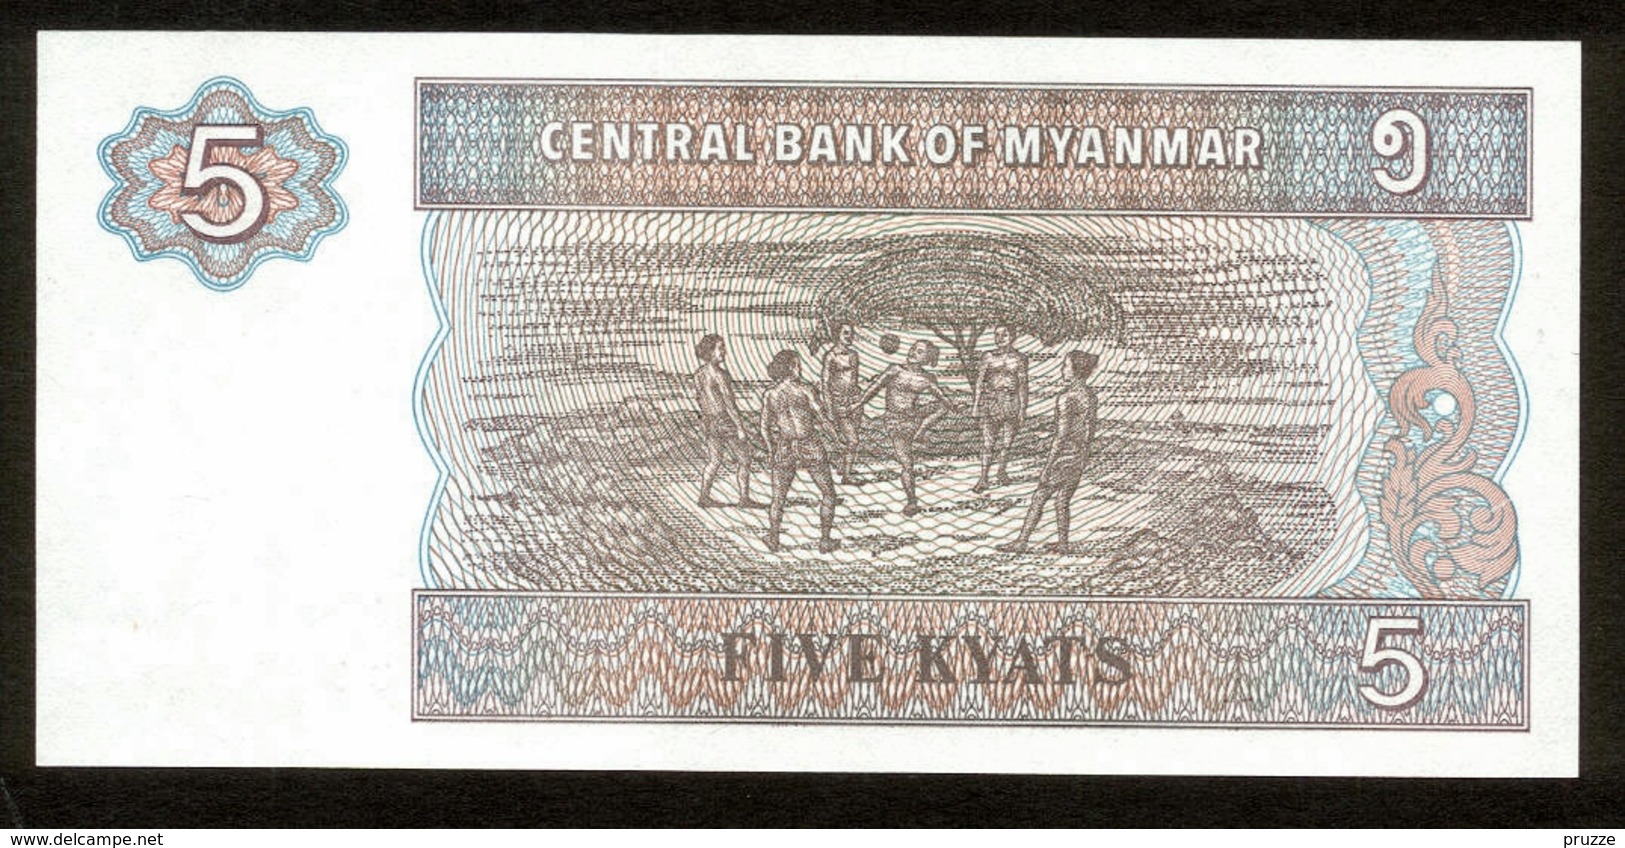 Myanmar 1996, 5 Kyats, CJ3705443, UNC, Kassenfrisch - Myanmar